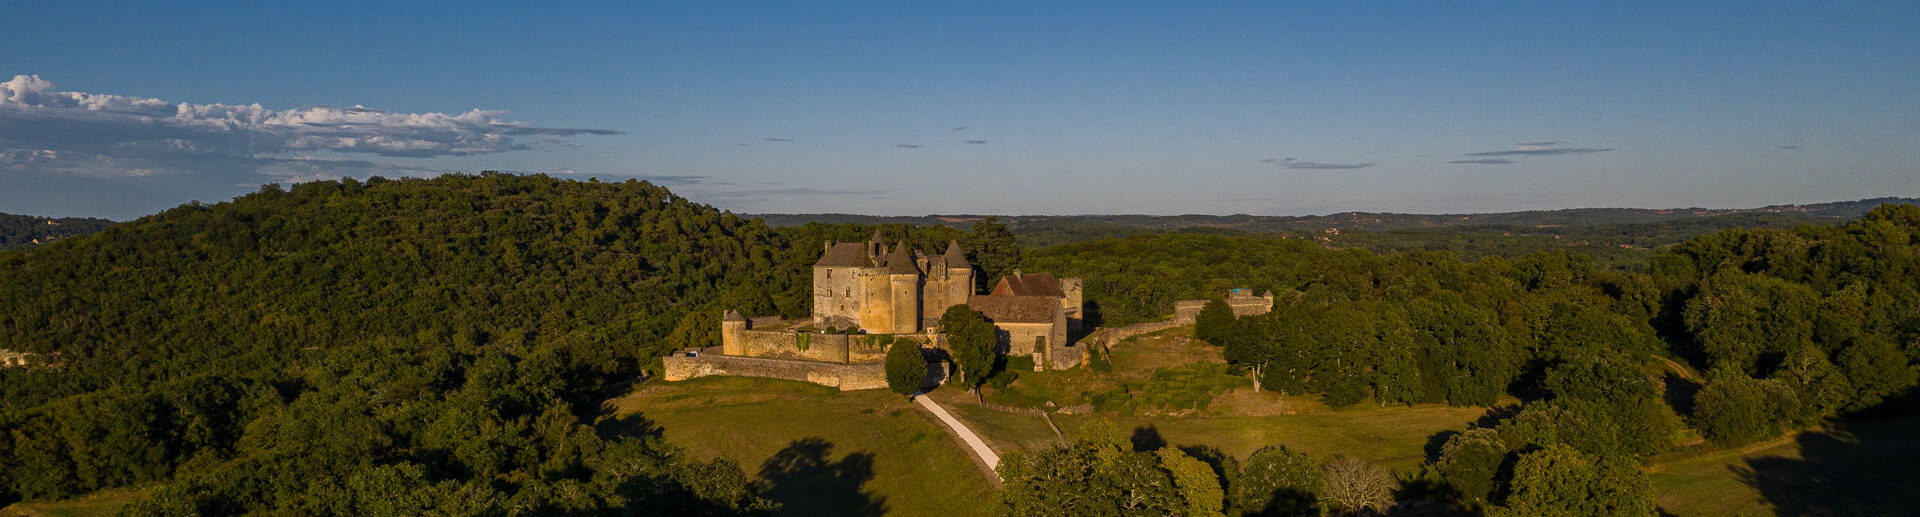 Chateau Fenelon Dordogne Perigord photo bandeau e1649960744114